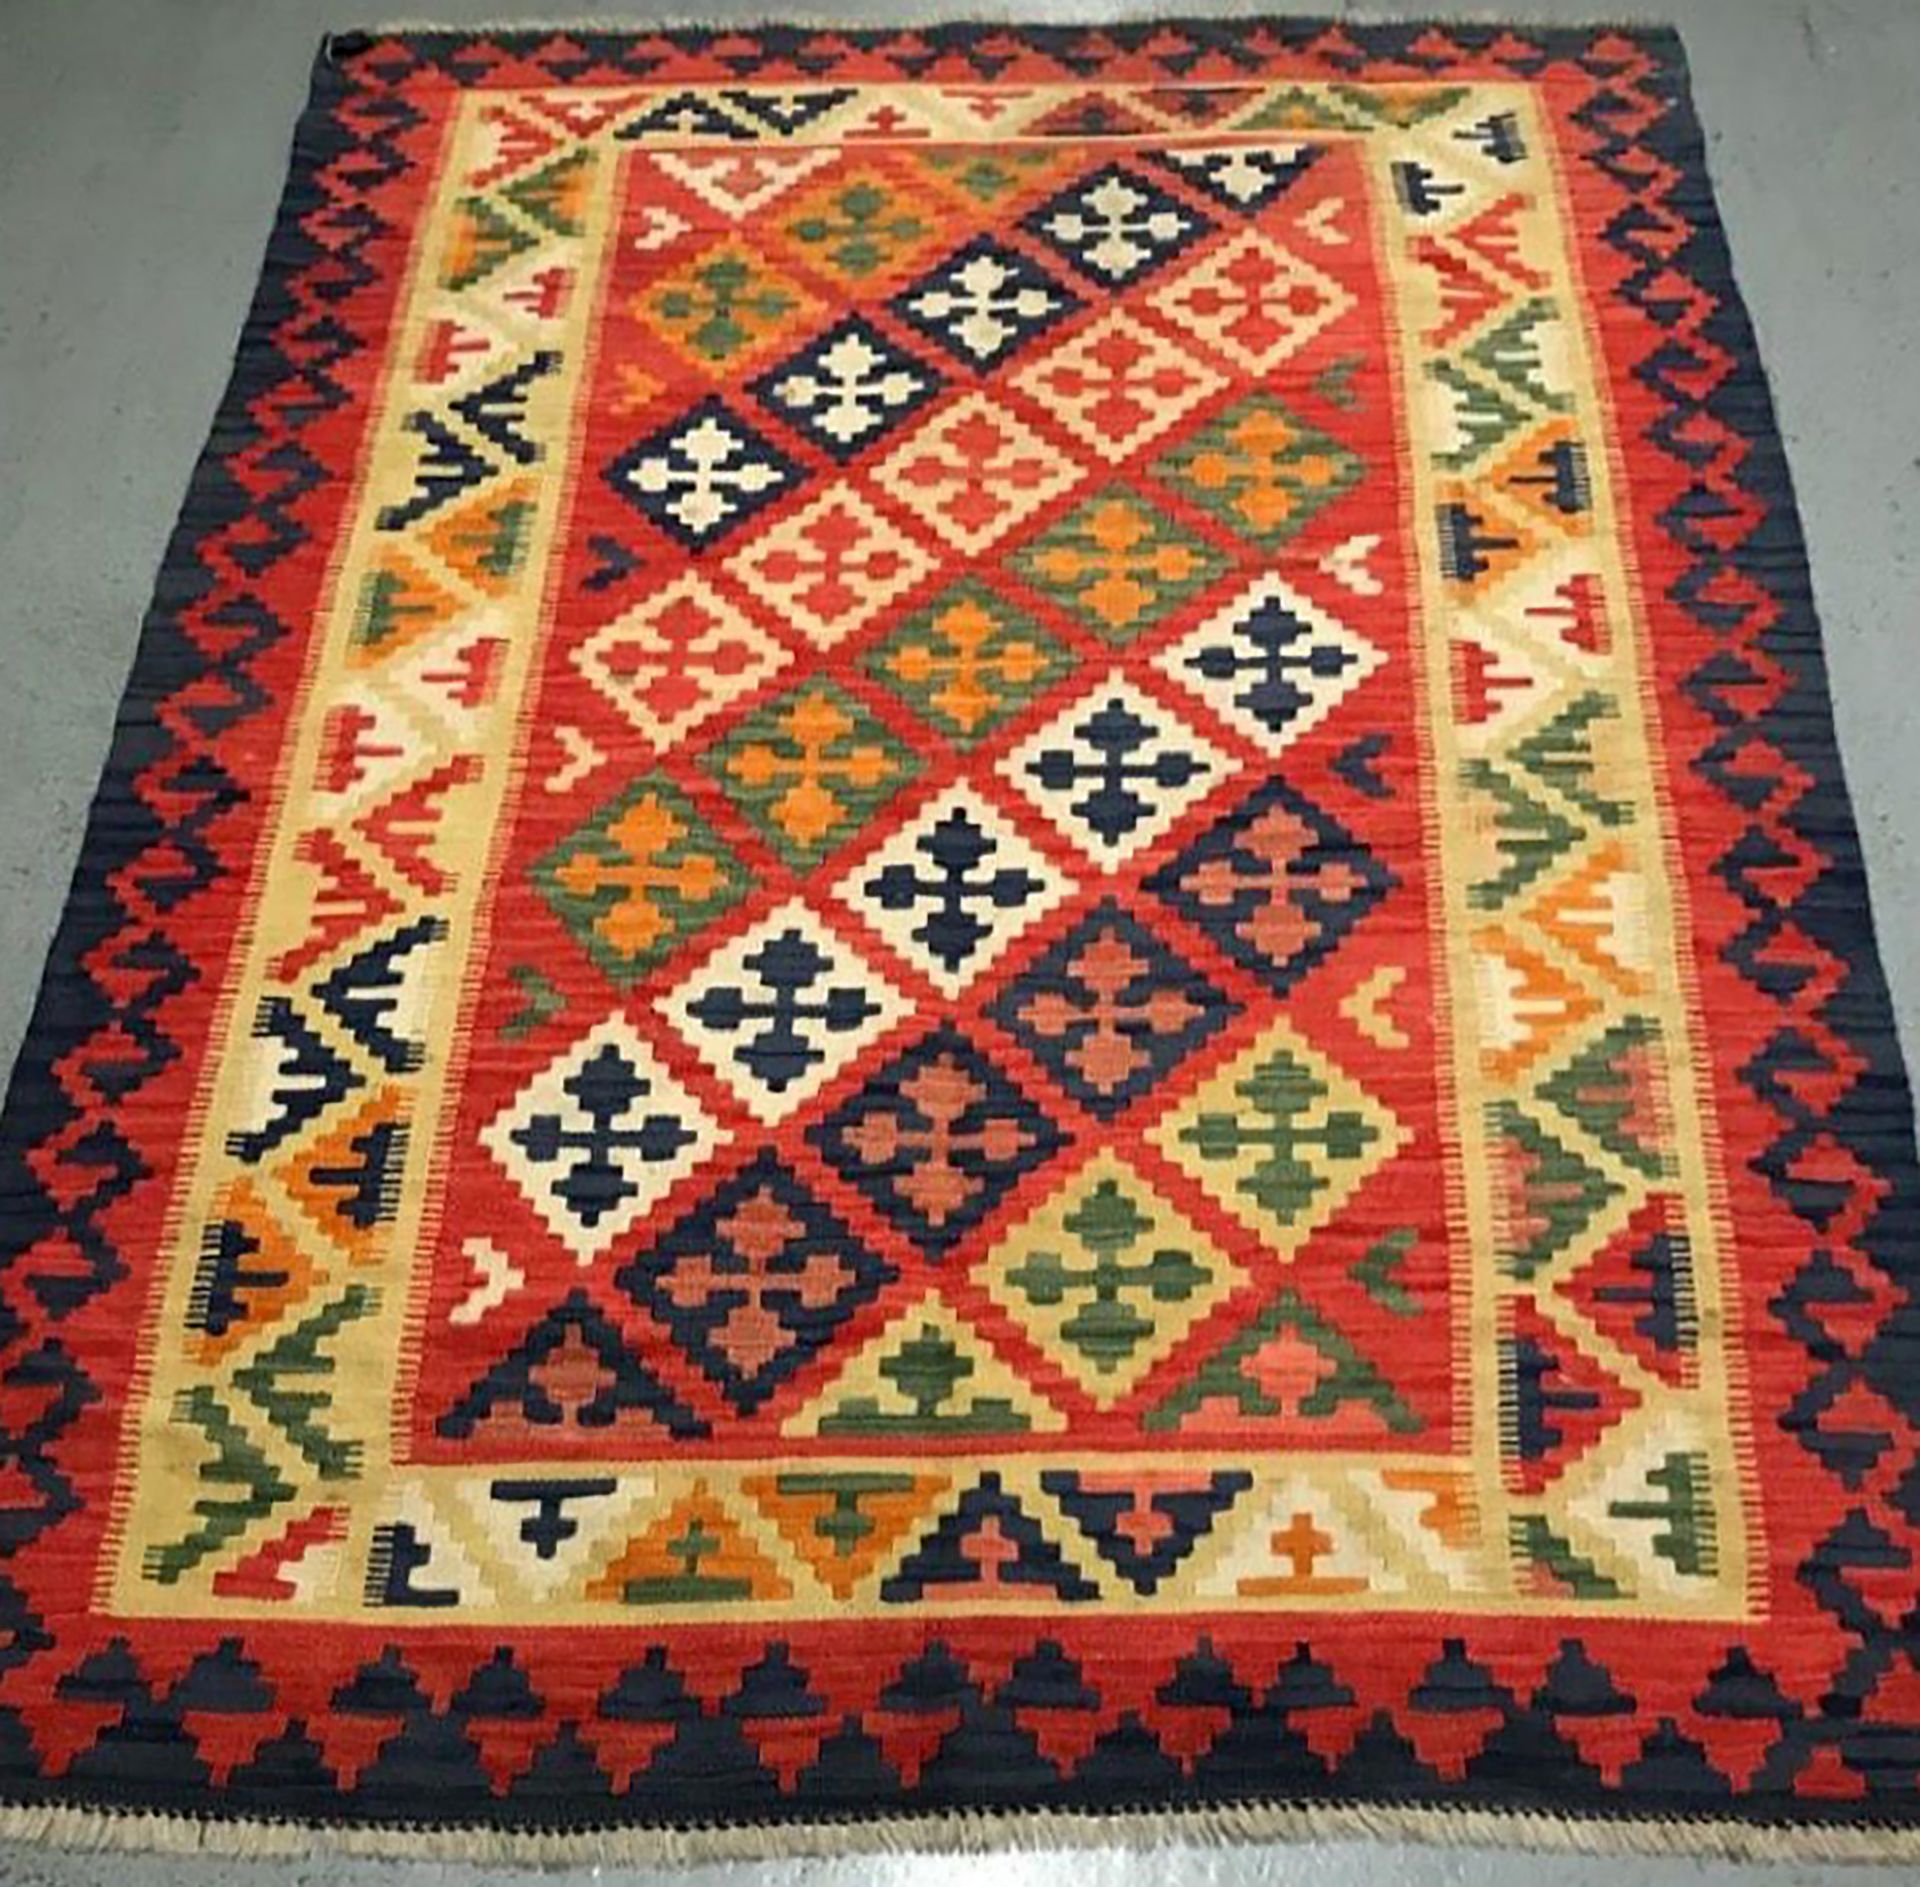 Null 土耳其的Kilim konya--土耳其

约1980年

尺寸 : 195 x 155 cm

技术特点

针线活

双面

挂毯技术

美丽的多色&hellip;